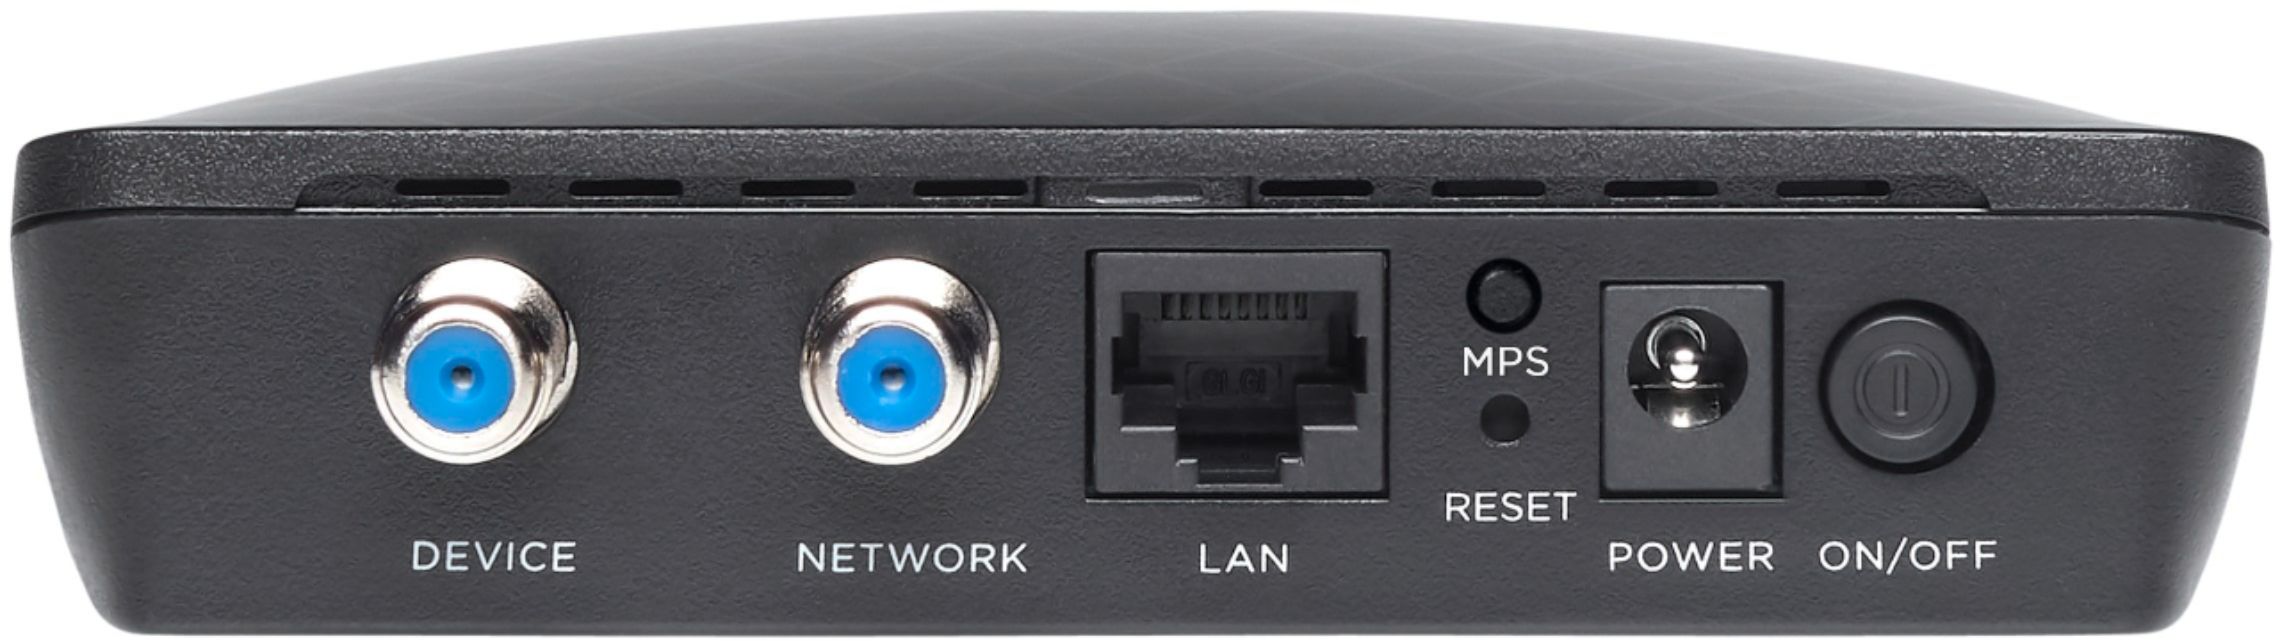 Angle View: Motorola - MM2025 MoCA Adapter for Ethernet (2 Pack) - Black